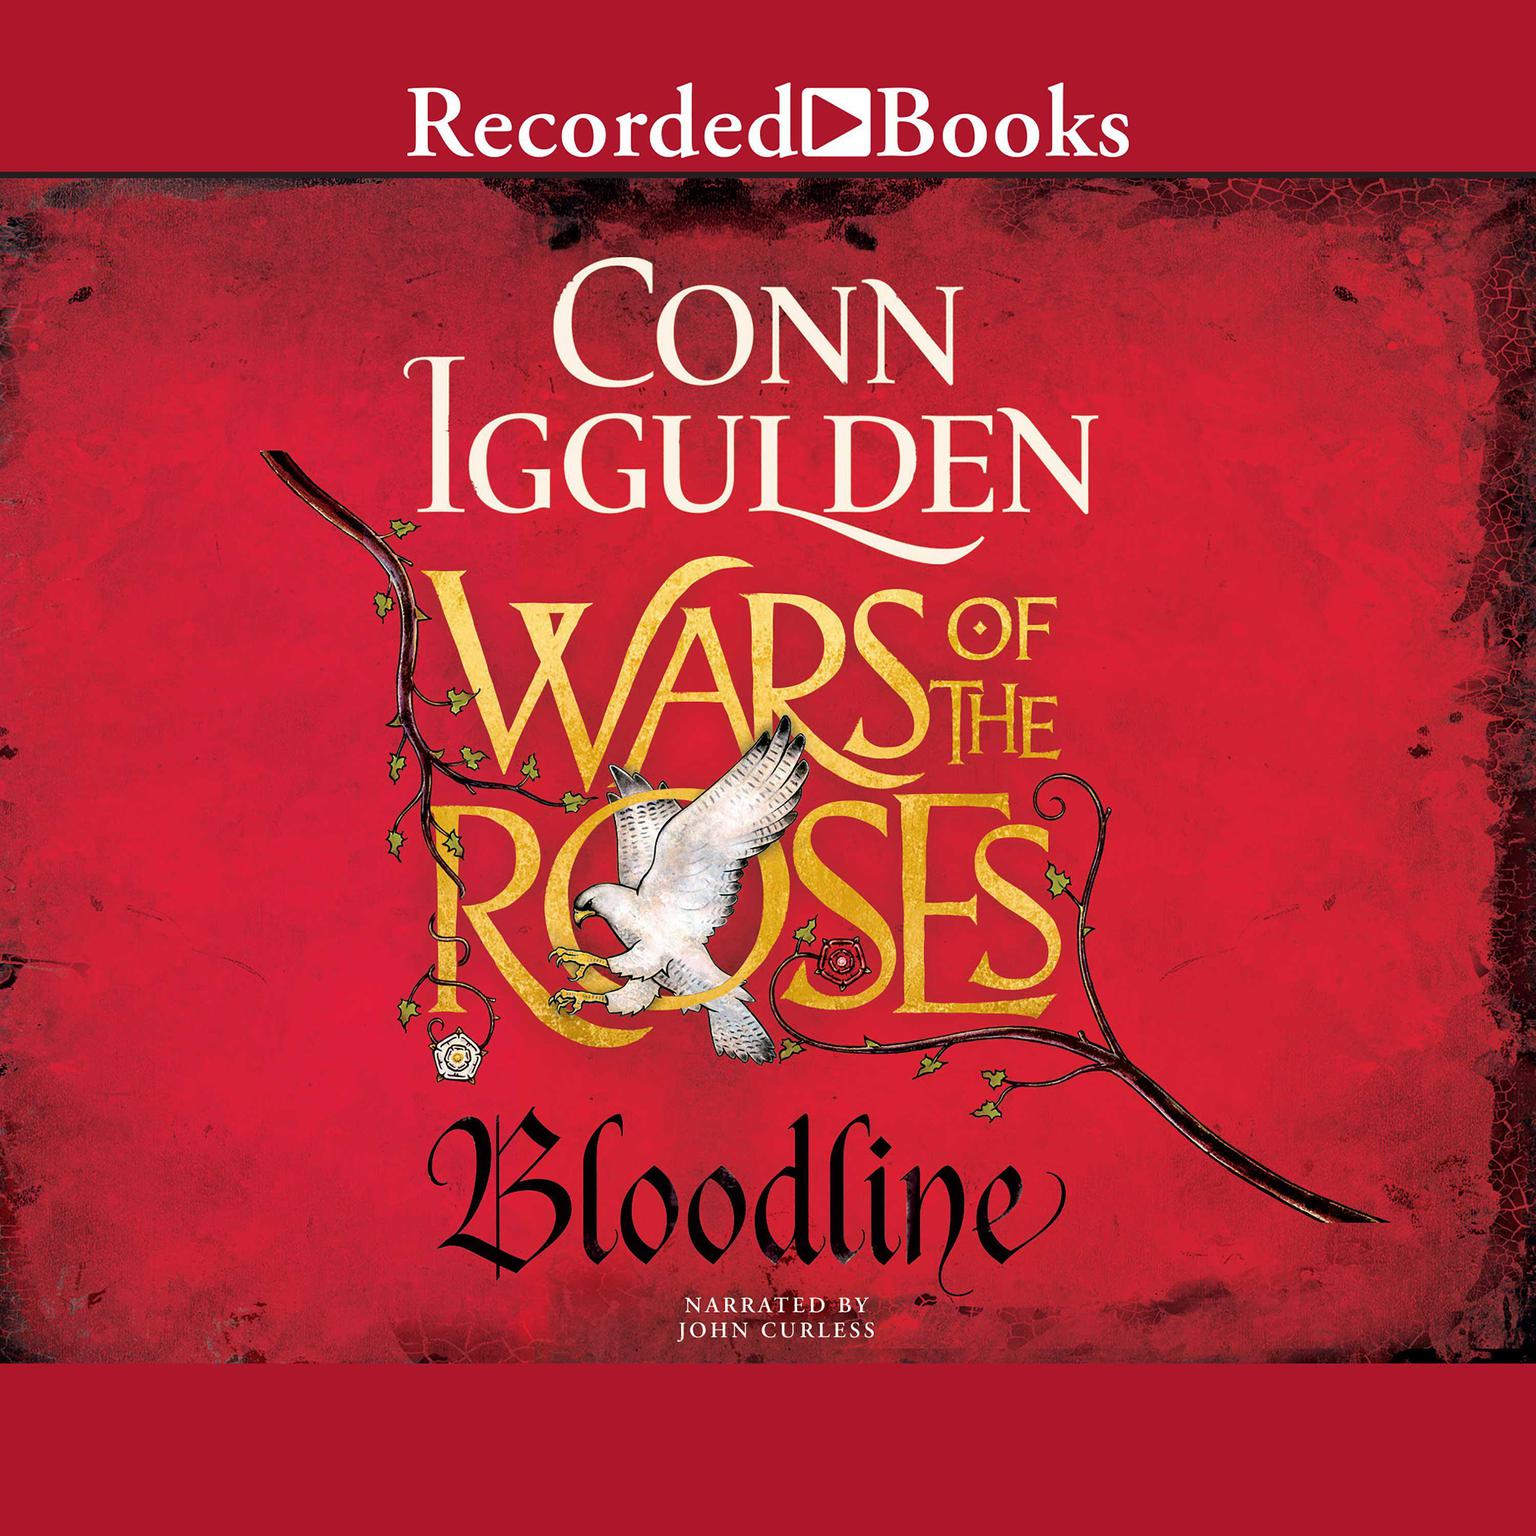 Wars of the Roses: Bloodline Audiobook, by Conn Iggulden